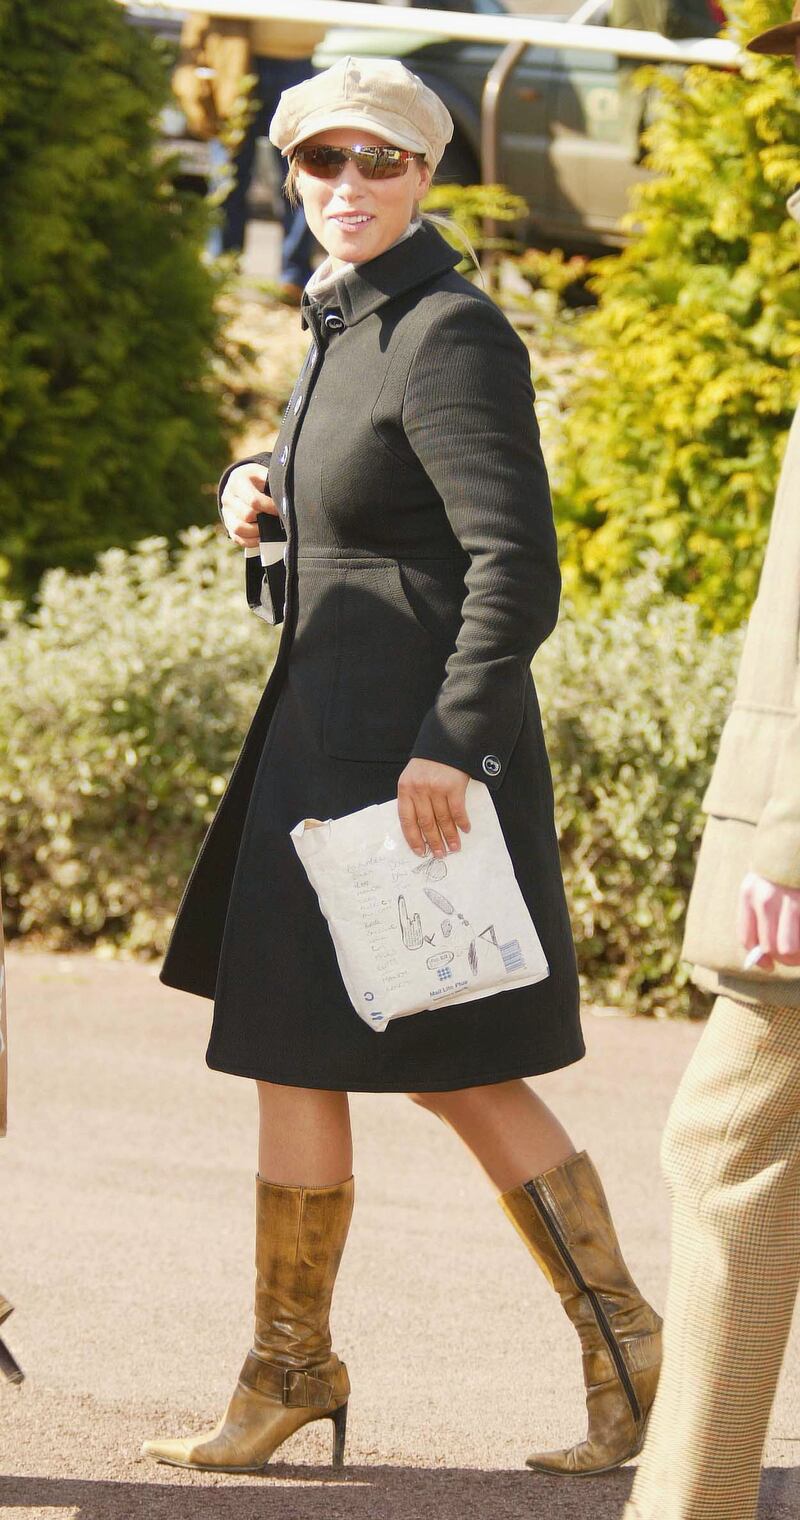 Zara Tindall's style evolution: Queen Elizabeth's granddaughter